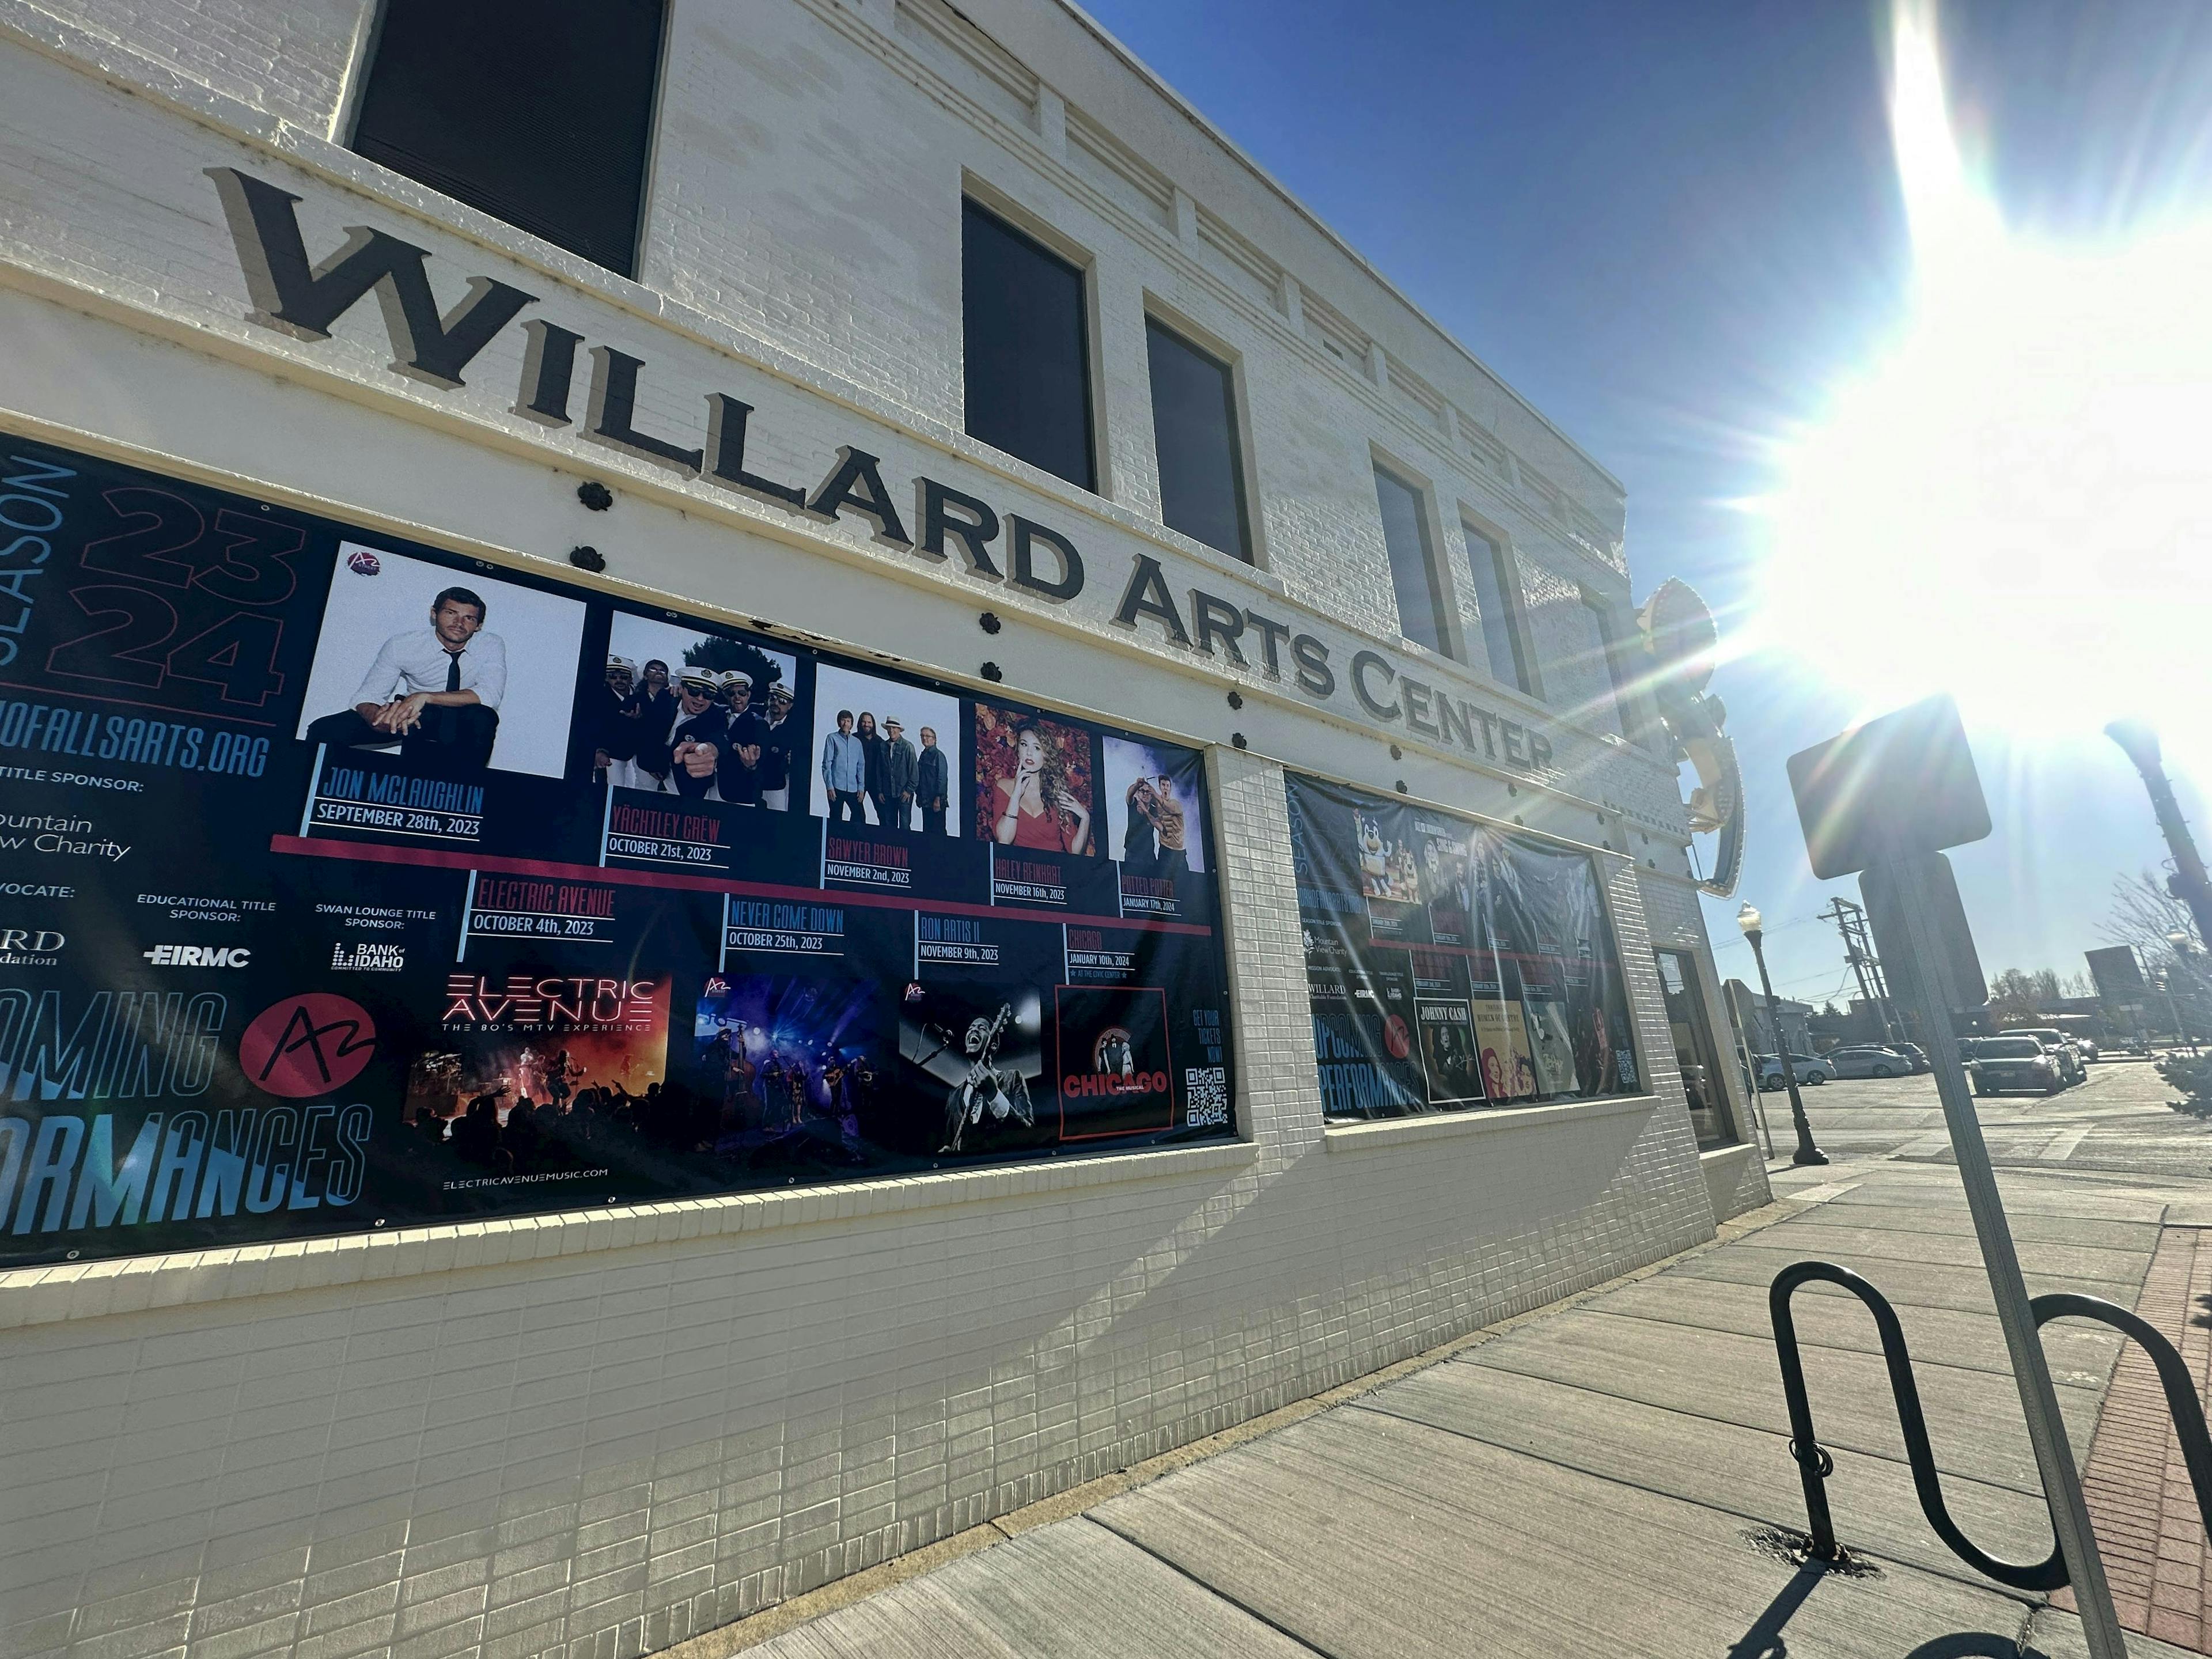 The Willard Arts Center in downtown Idaho Falls, Idaho.